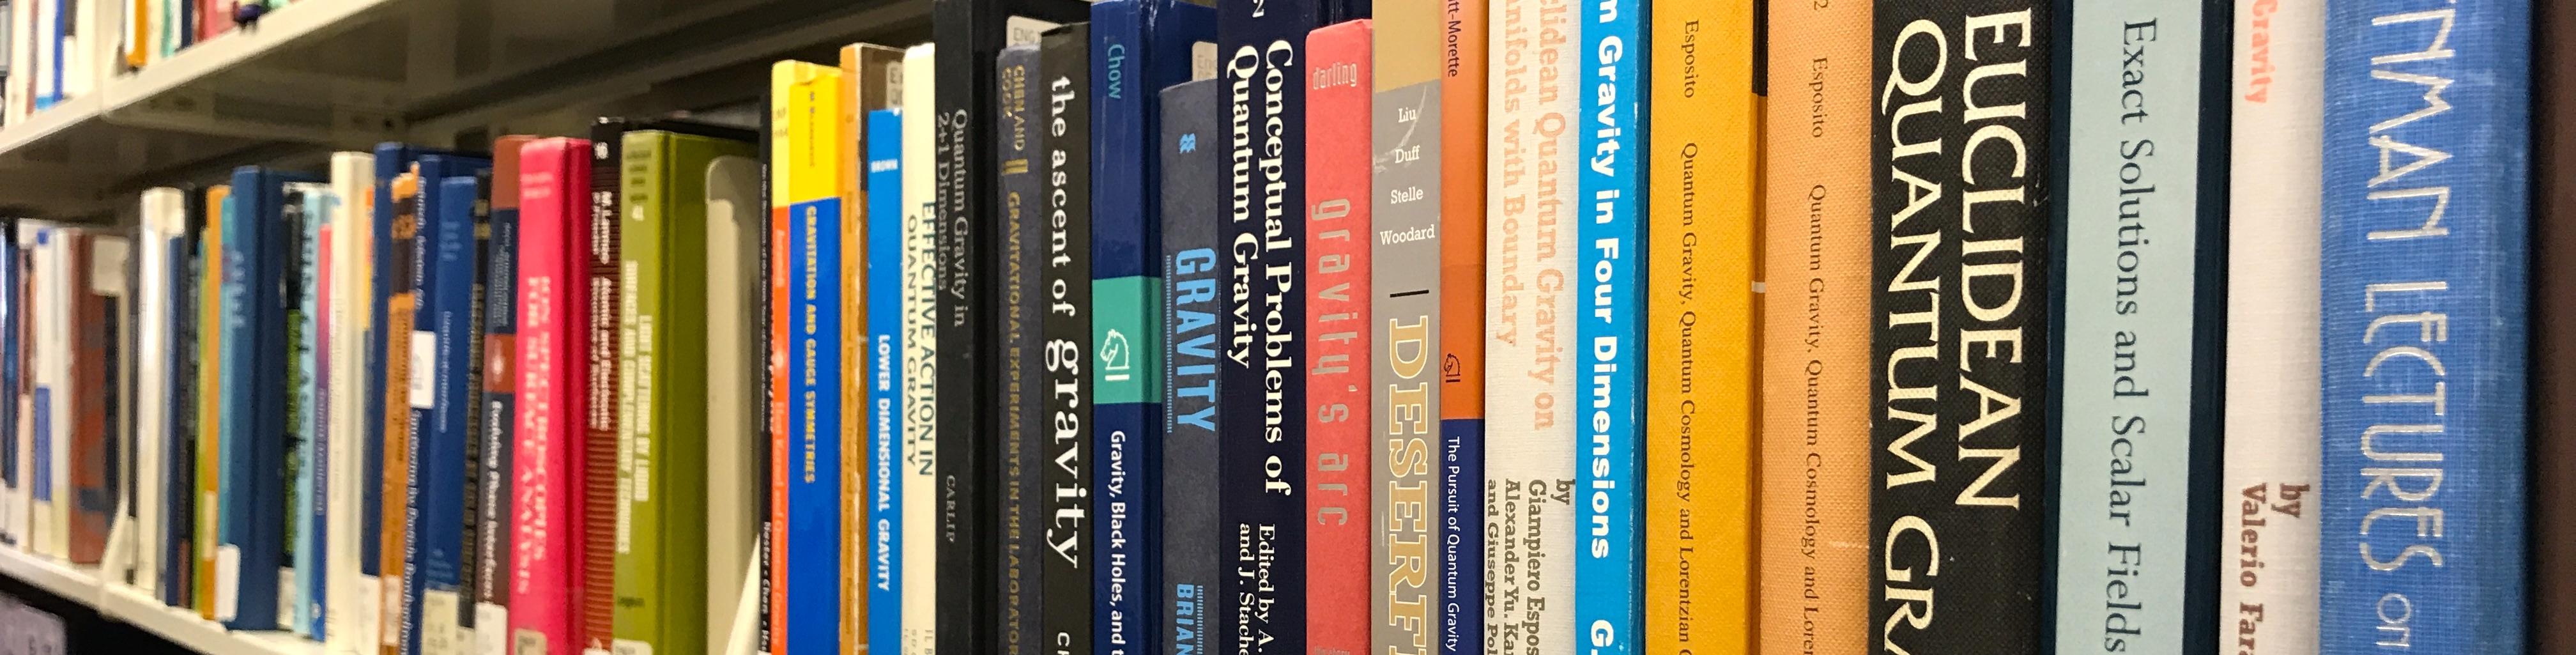 STEM bookshelf